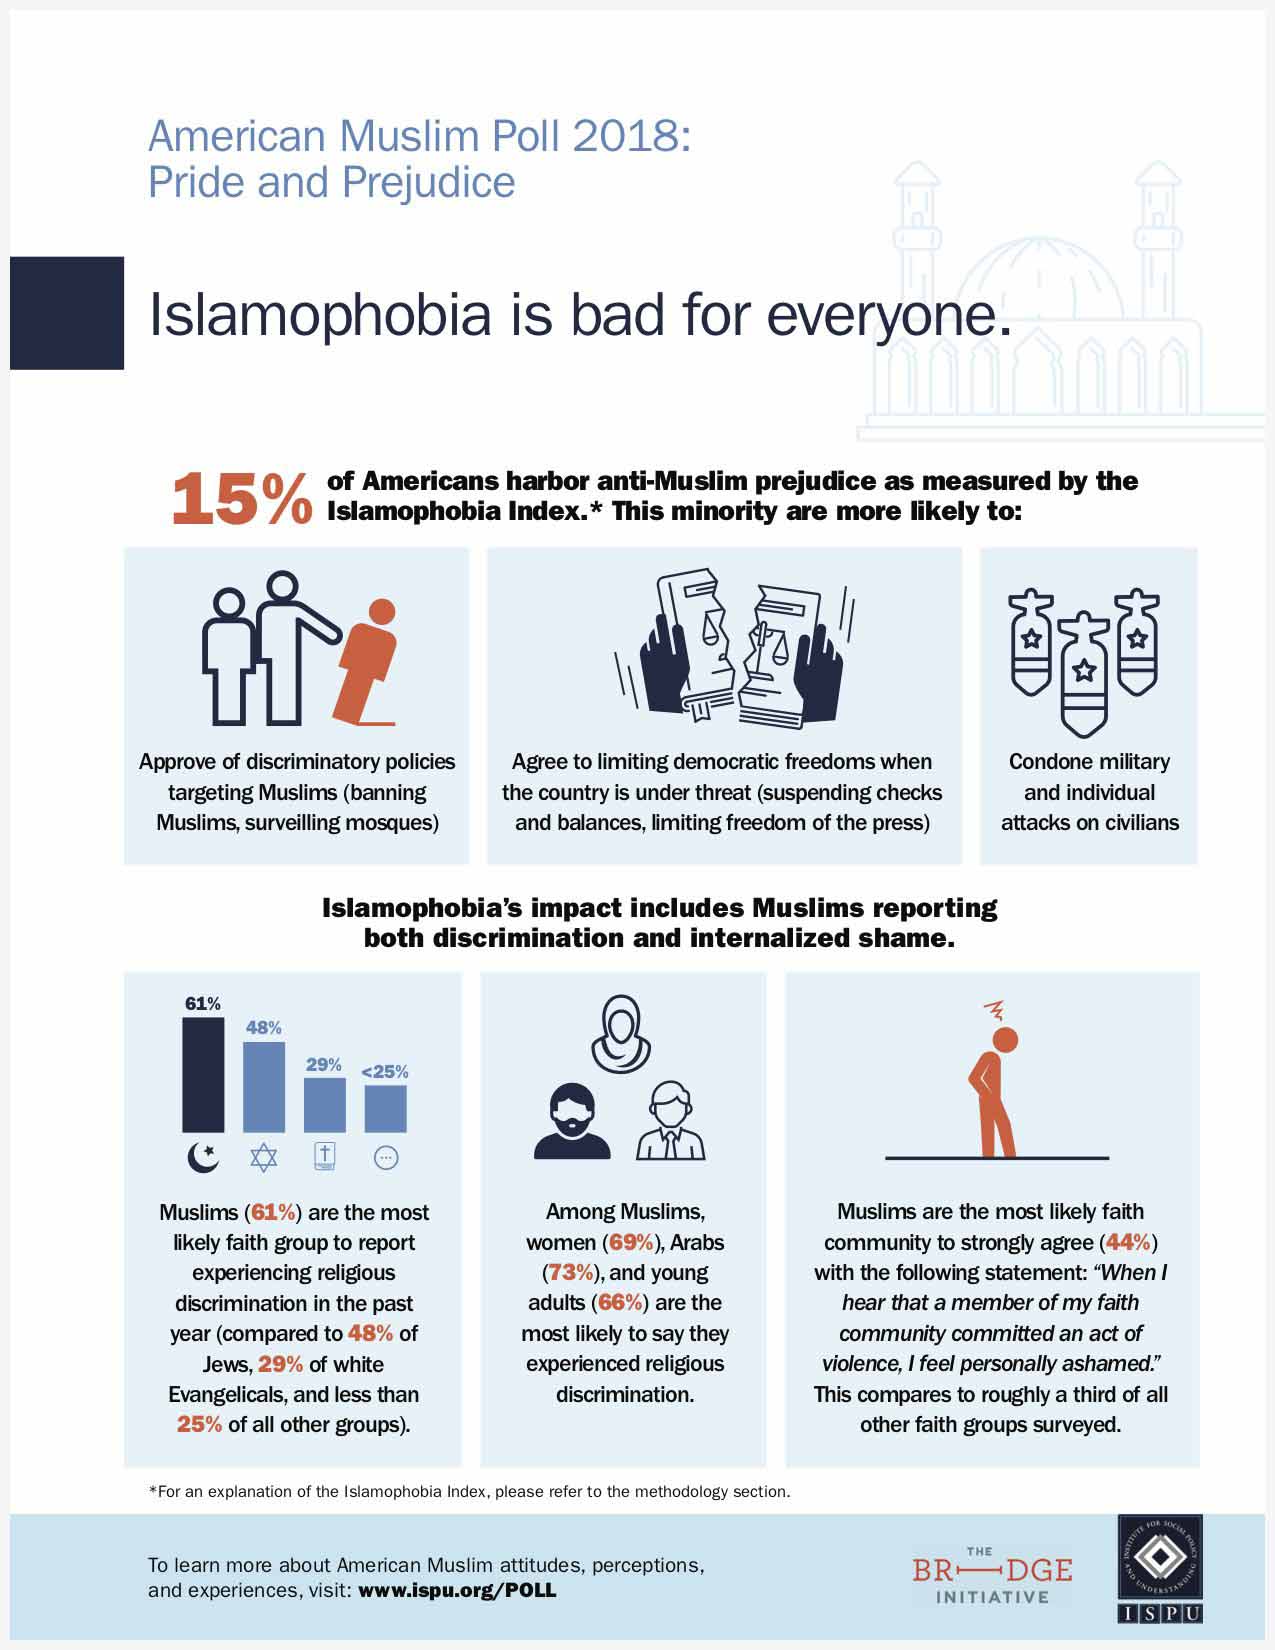 Islamophobia is bad for everyone infographic